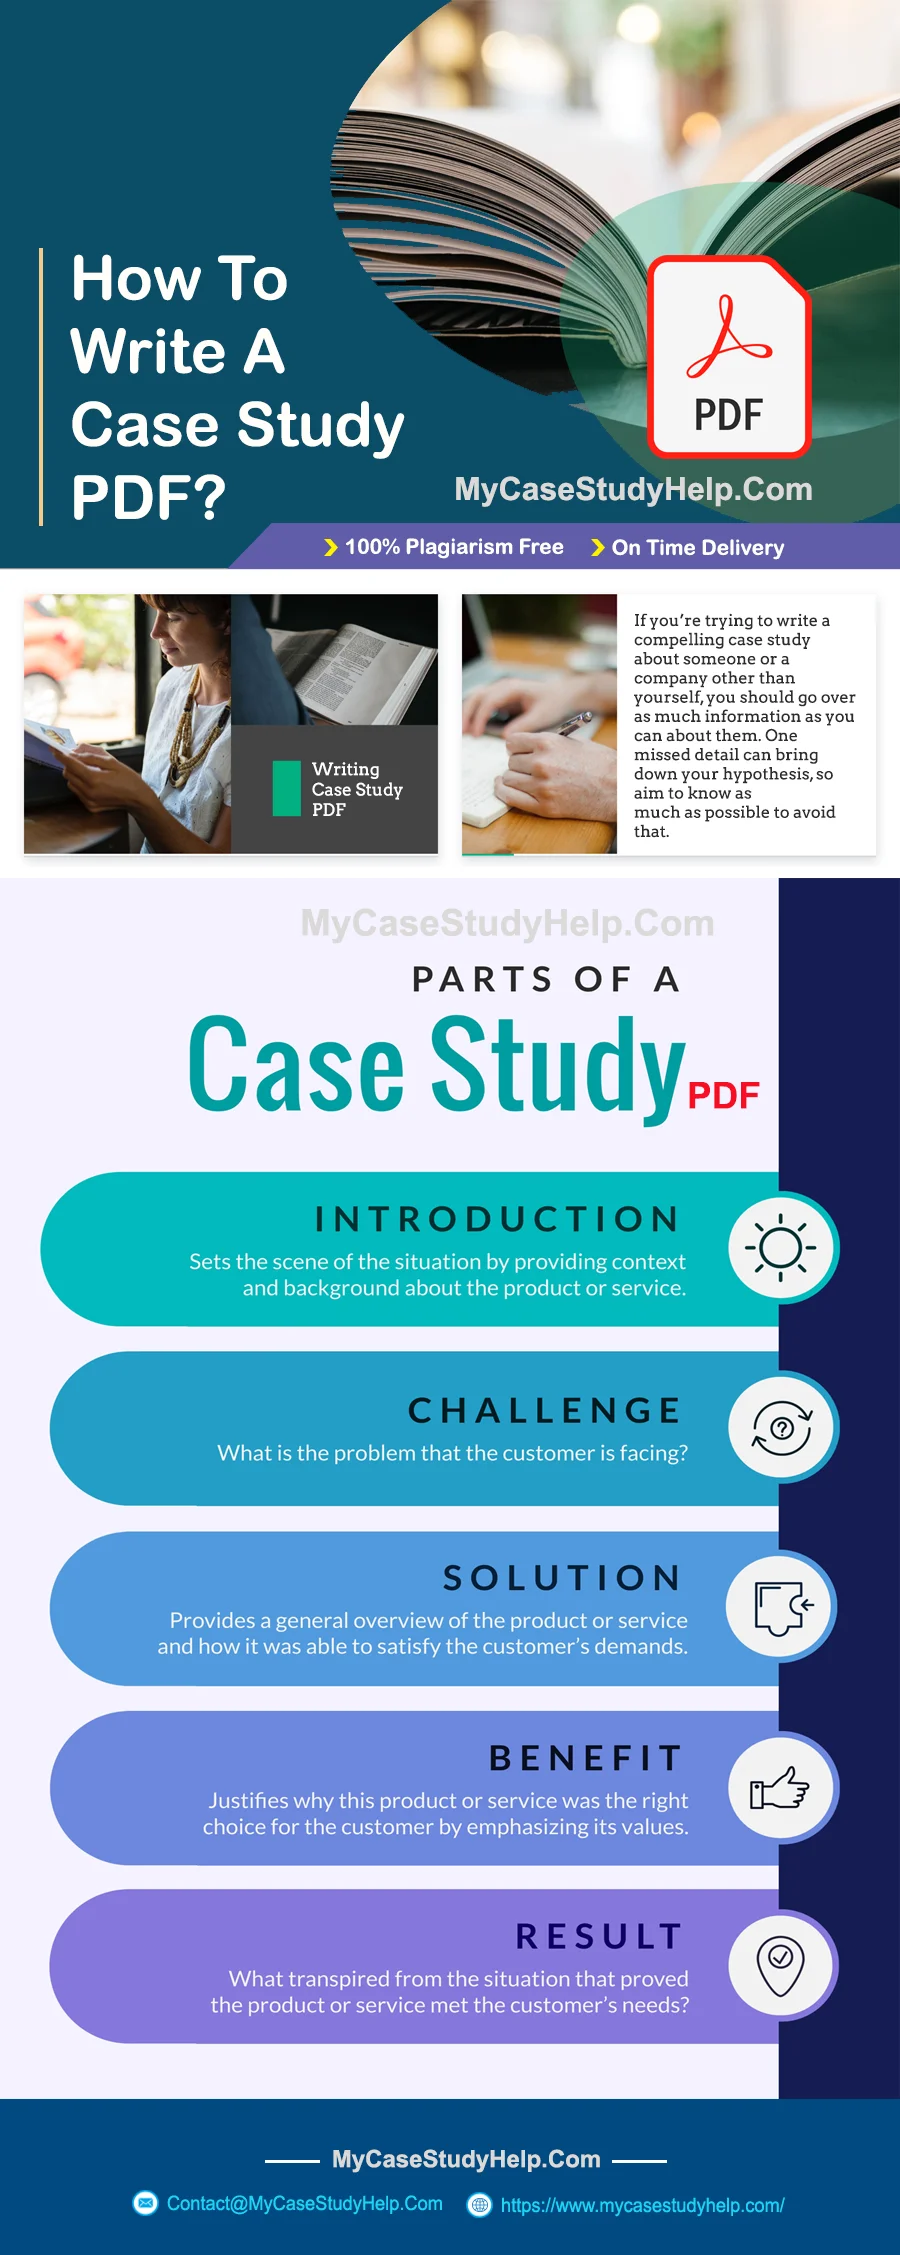 How To Write A Case Study PDF